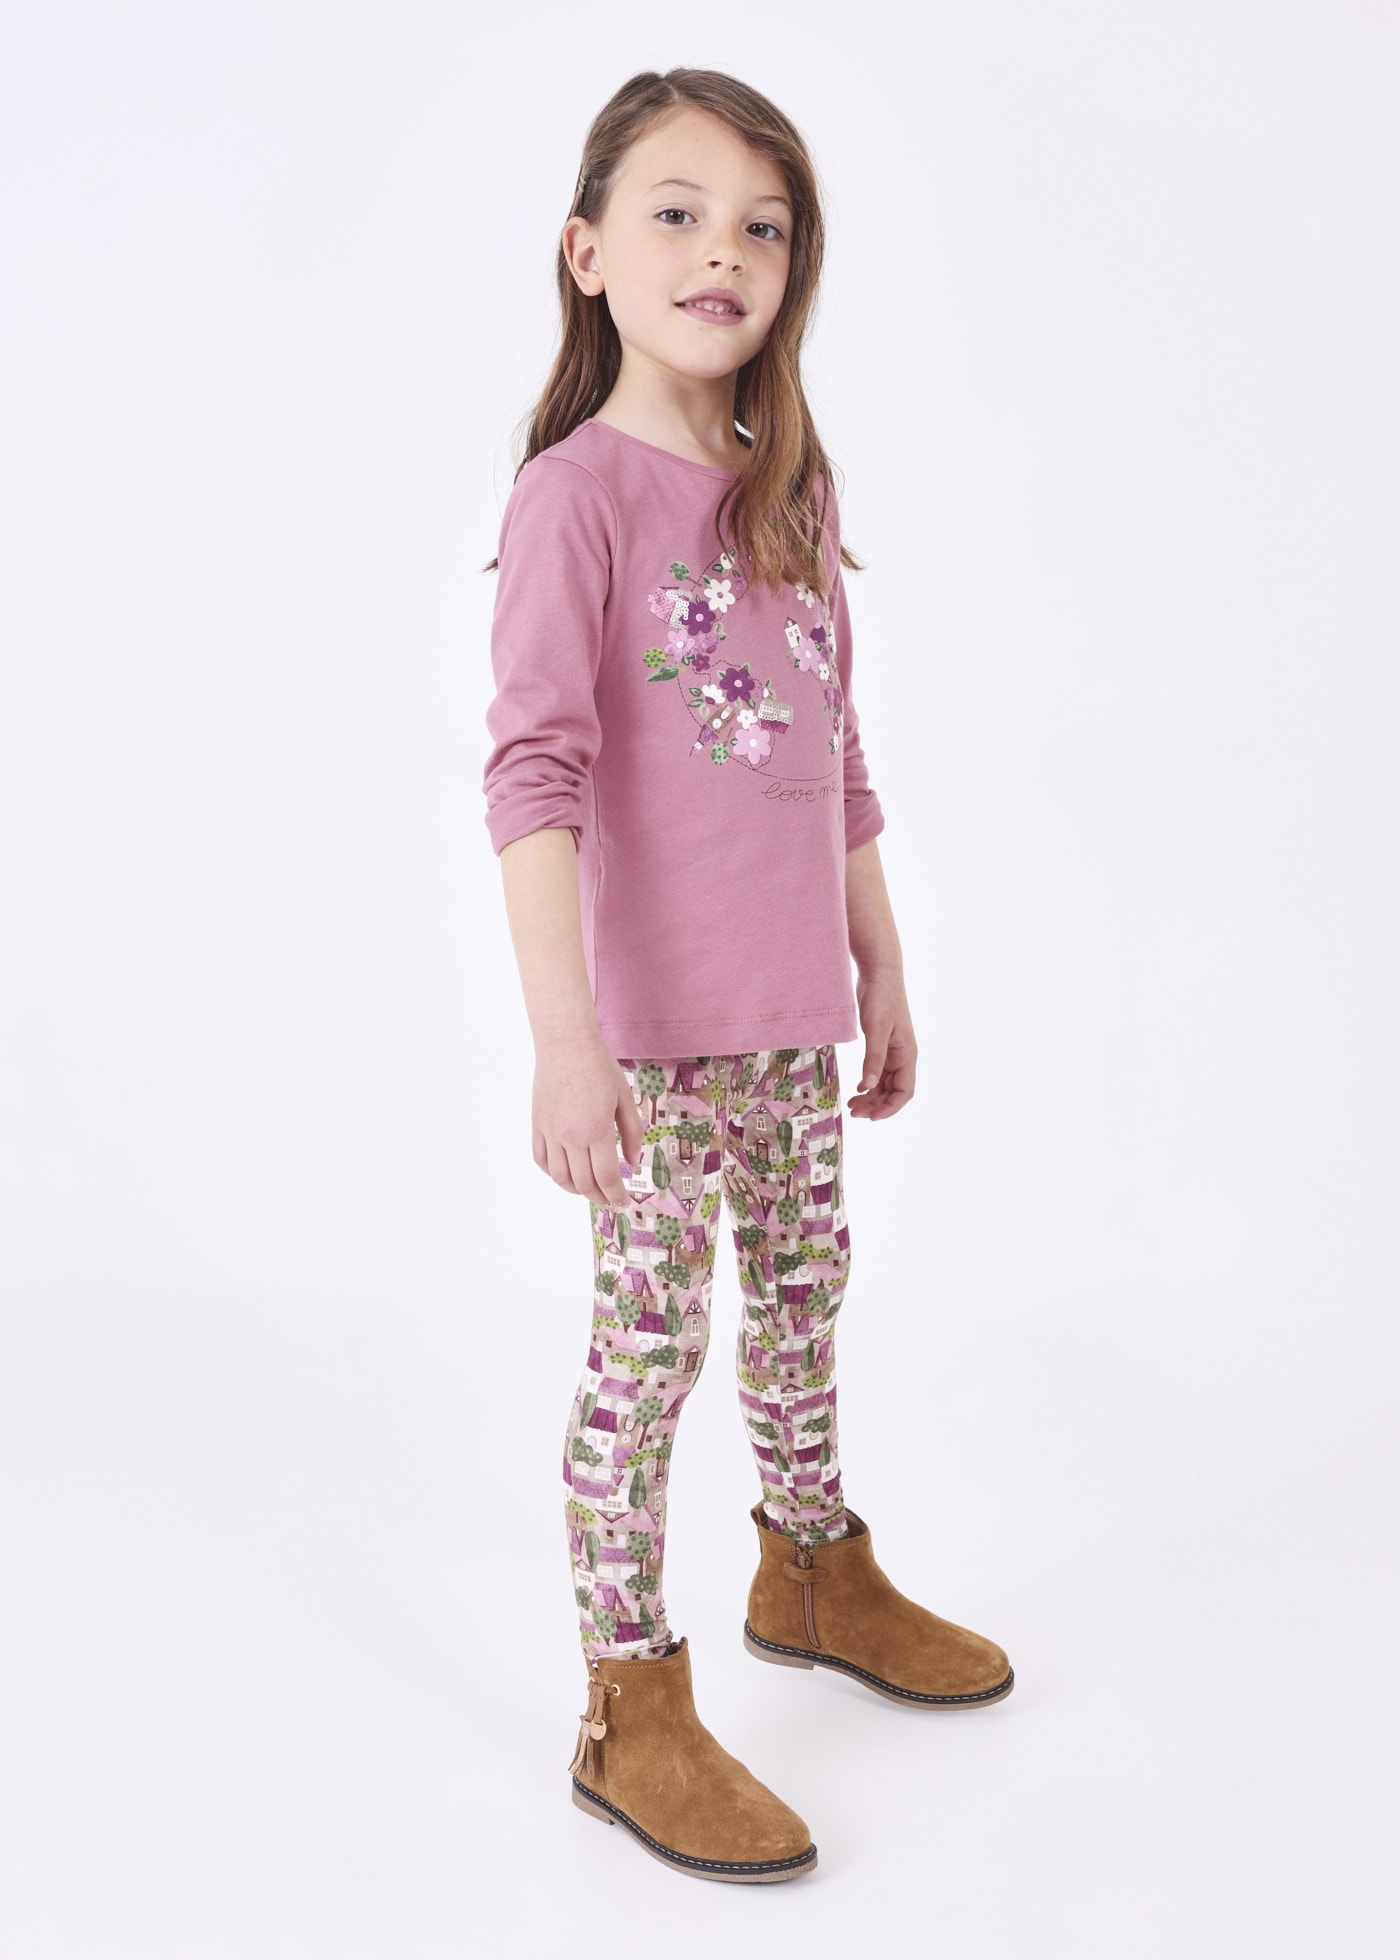 leggings - Buy branded leggings online cotton, cotton blend, casual wear,  leggings for Girl at Limeroad. | page 10